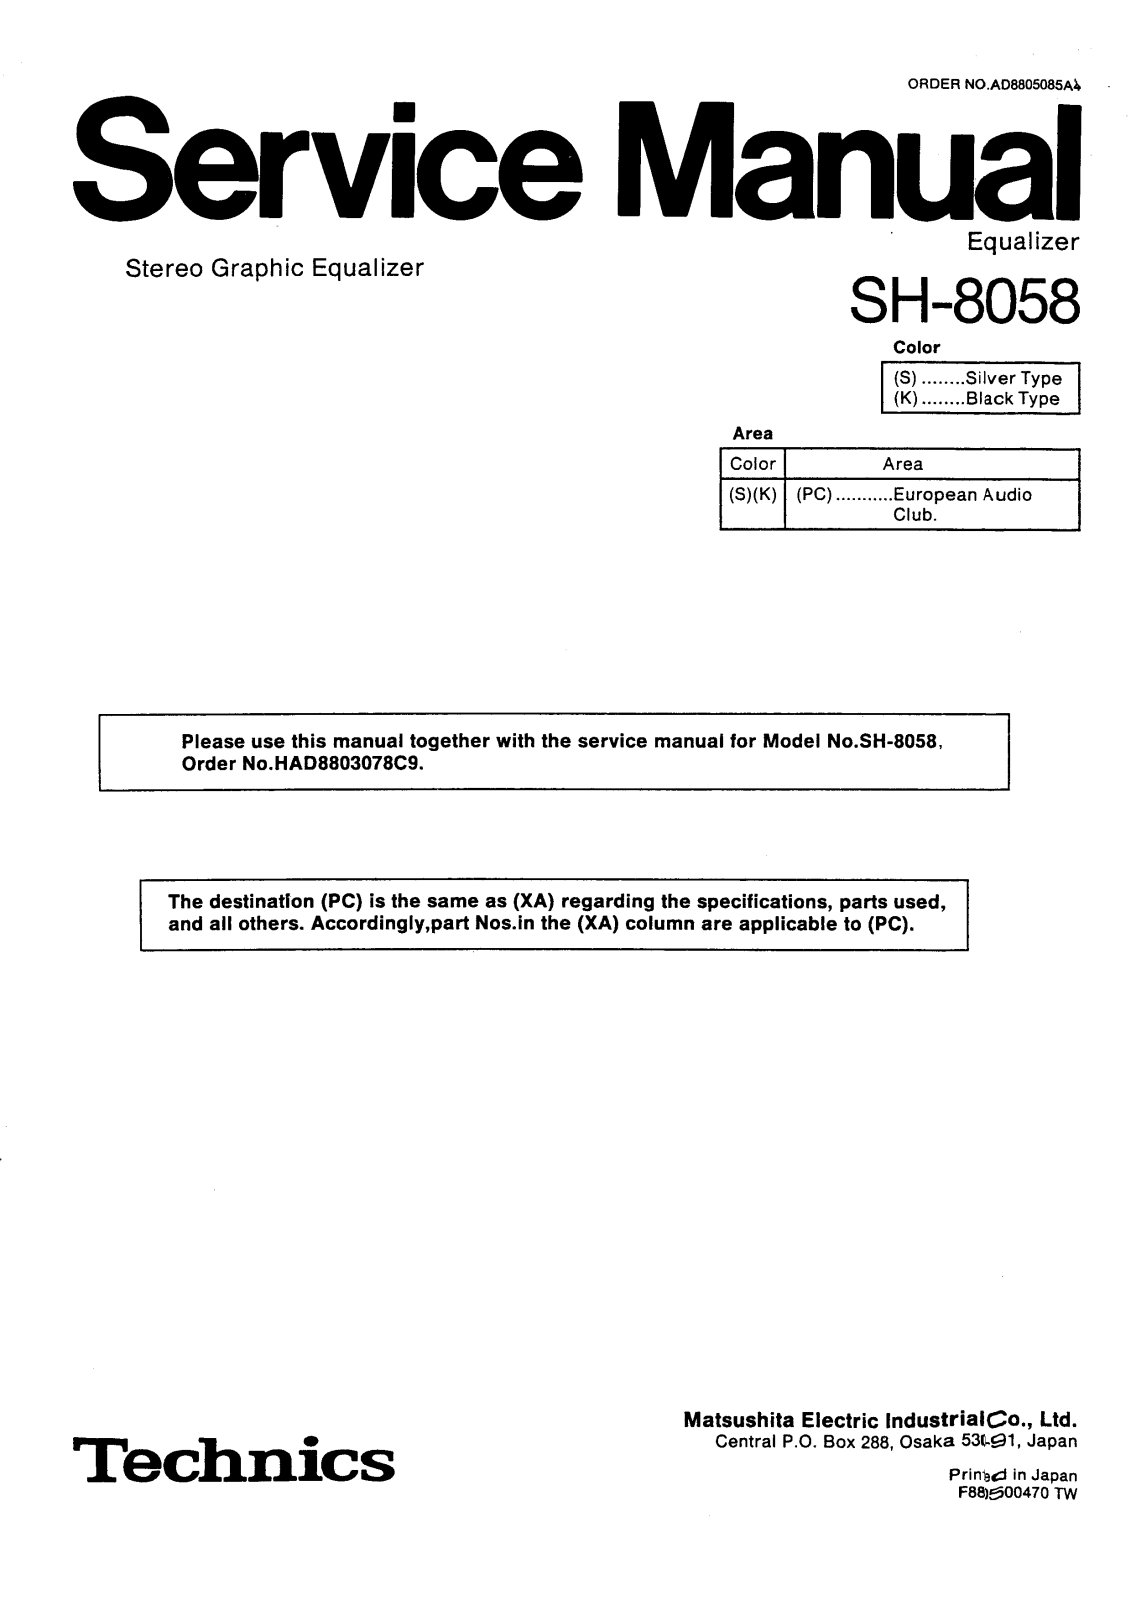 Technics SH-8058 Service Manual